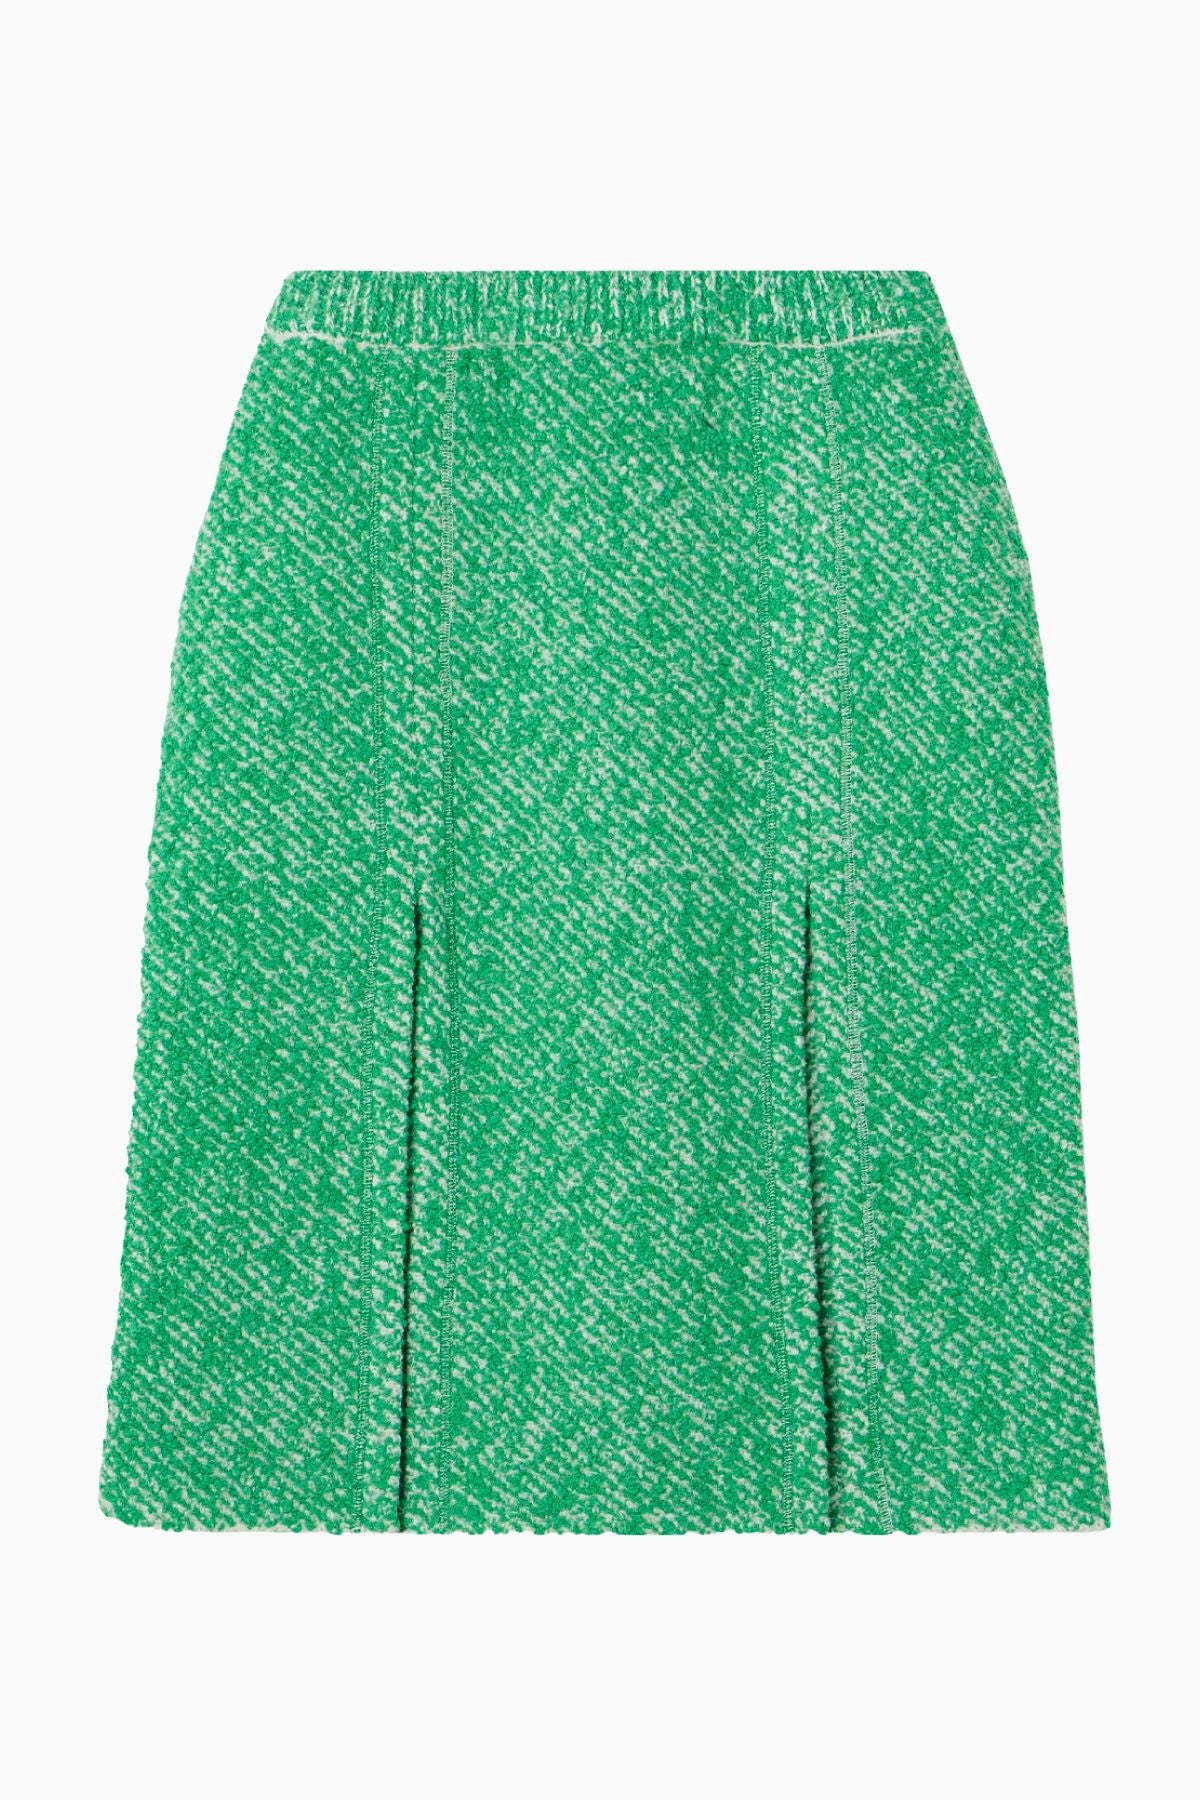 Stella McCartney Bouclé Knit Skirt - White/ Green